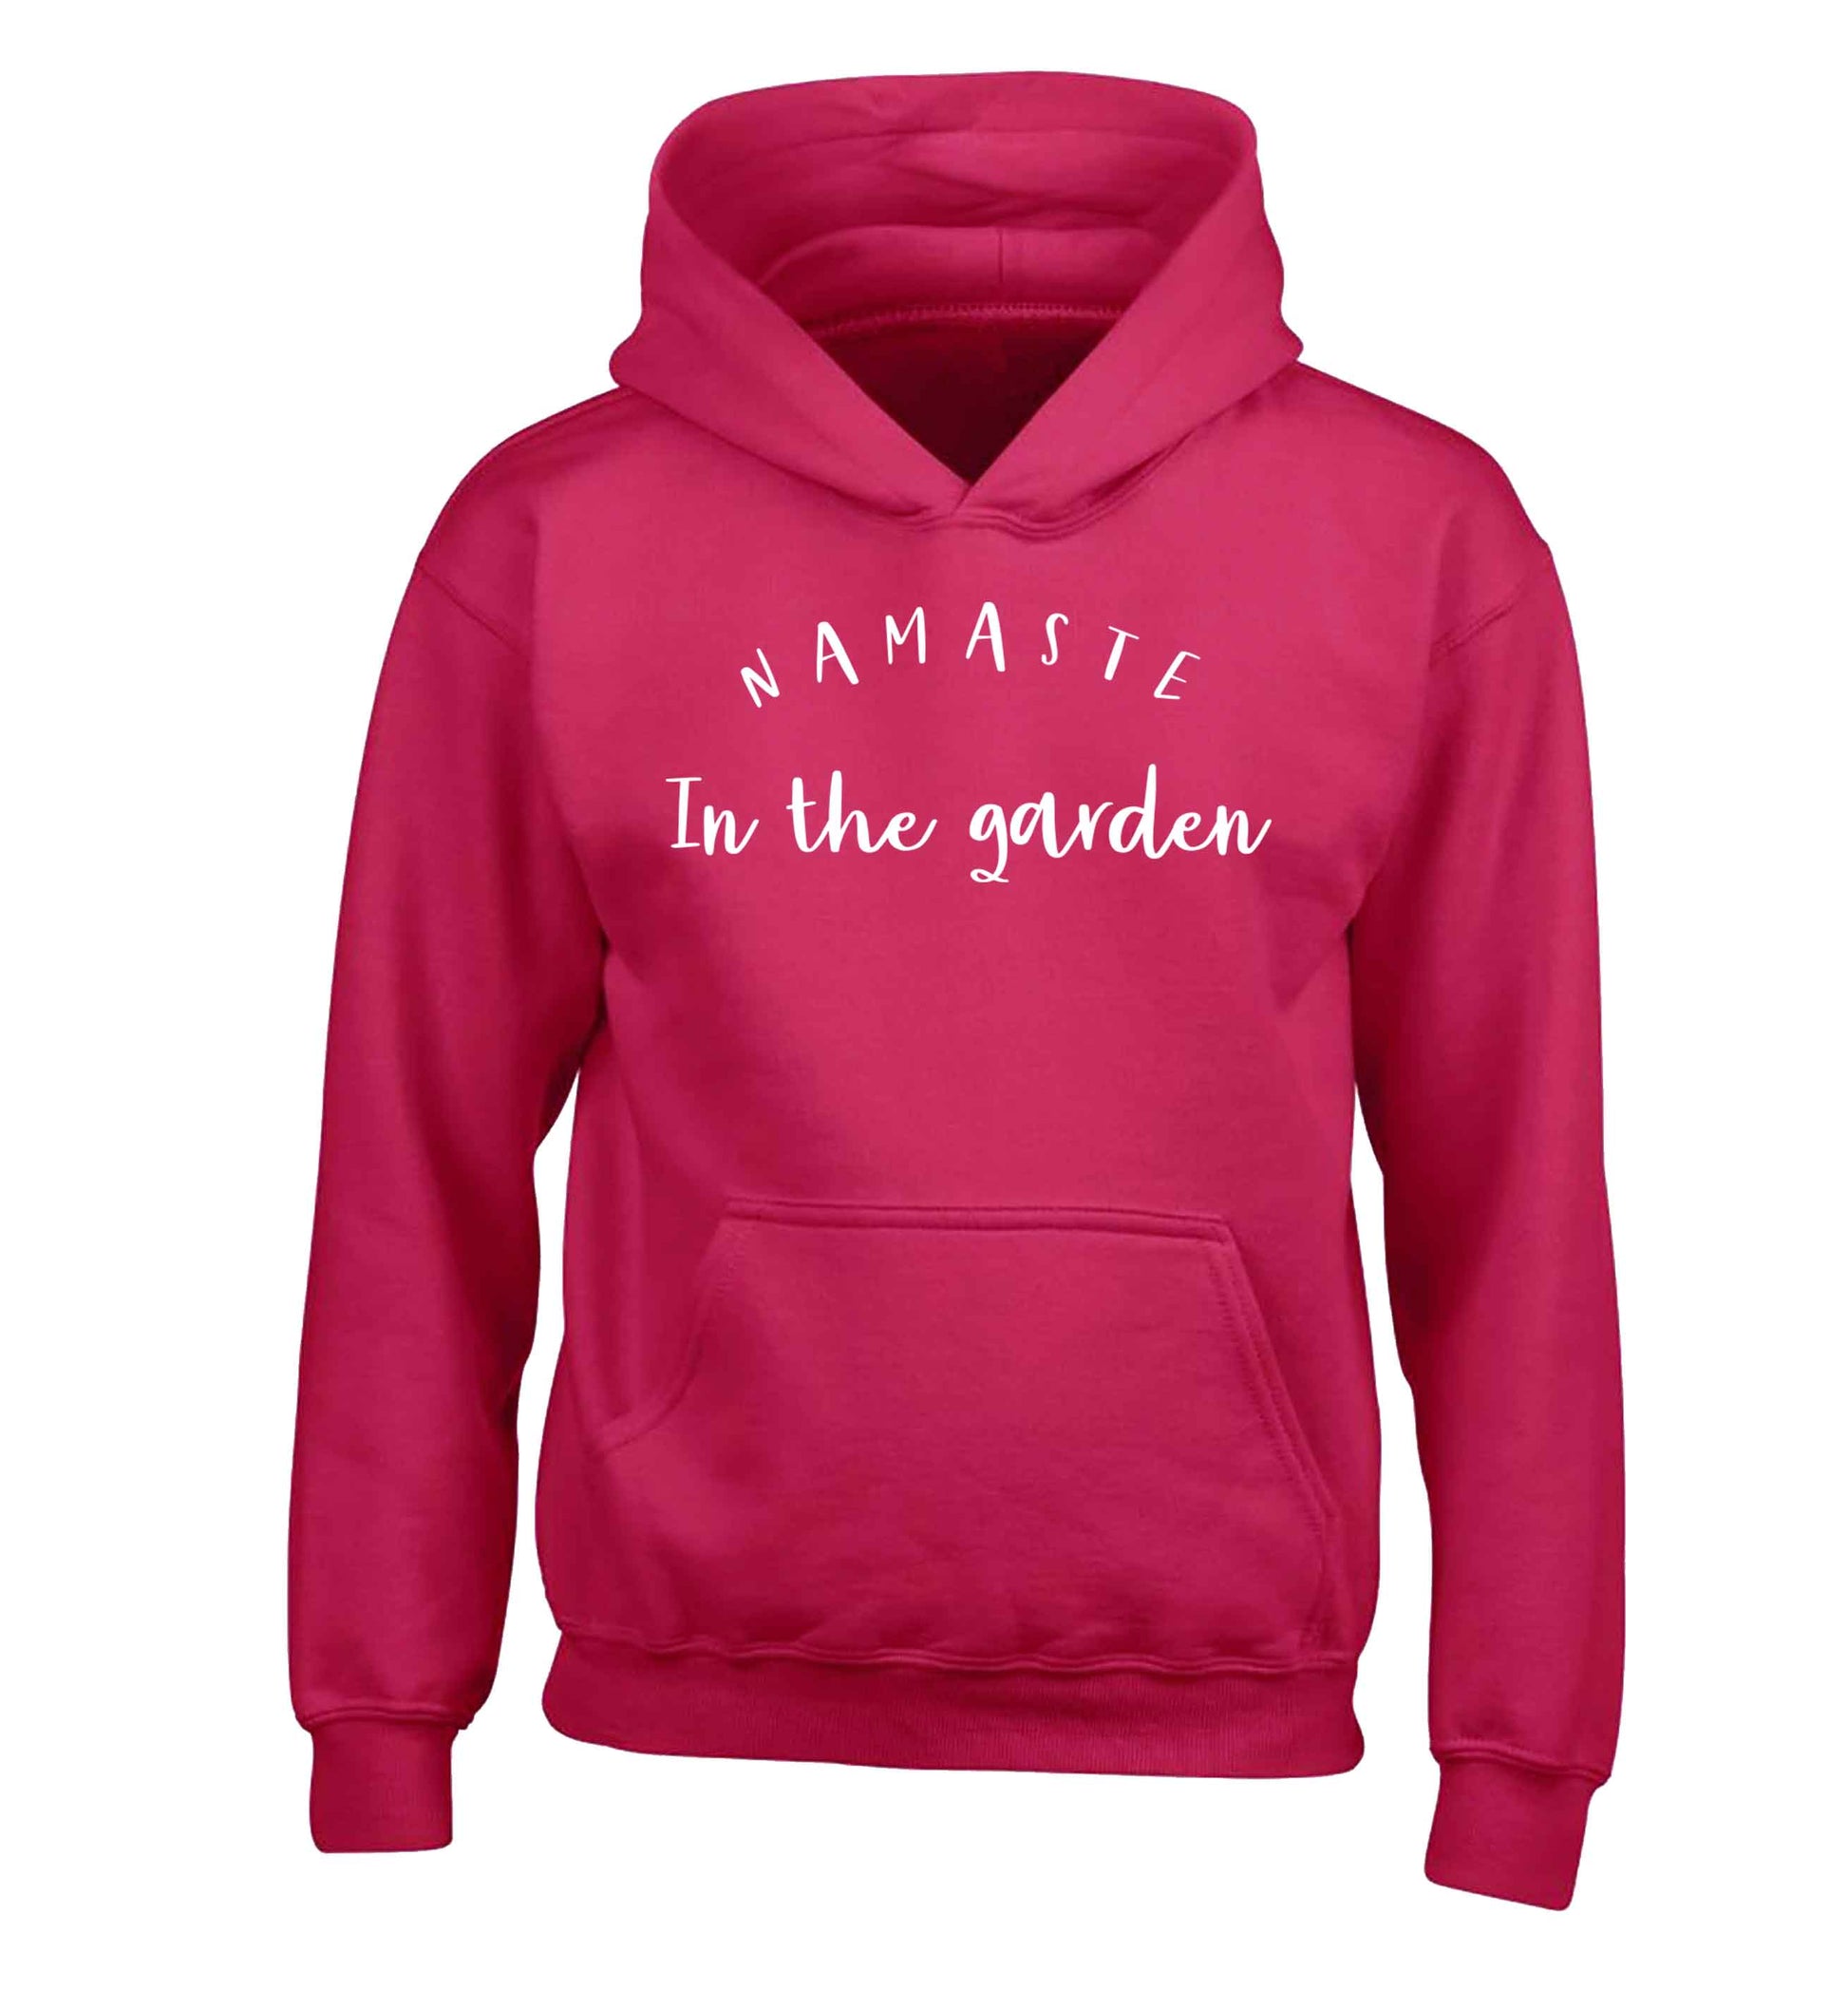 Namaste in the garden children's pink hoodie 12-13 Years